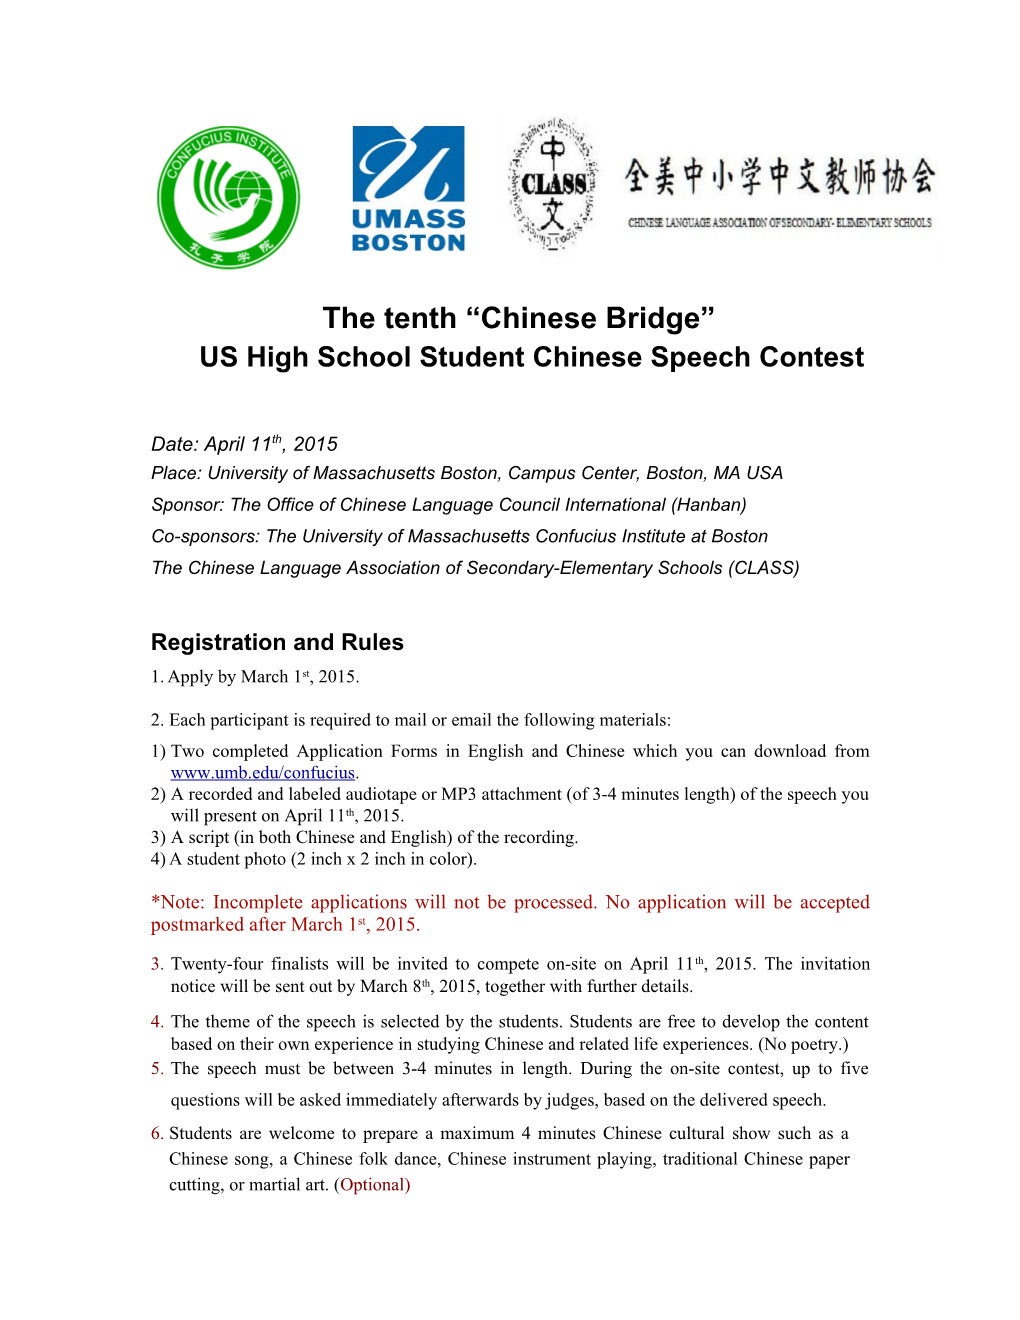 The Tenth Chinese Bridge